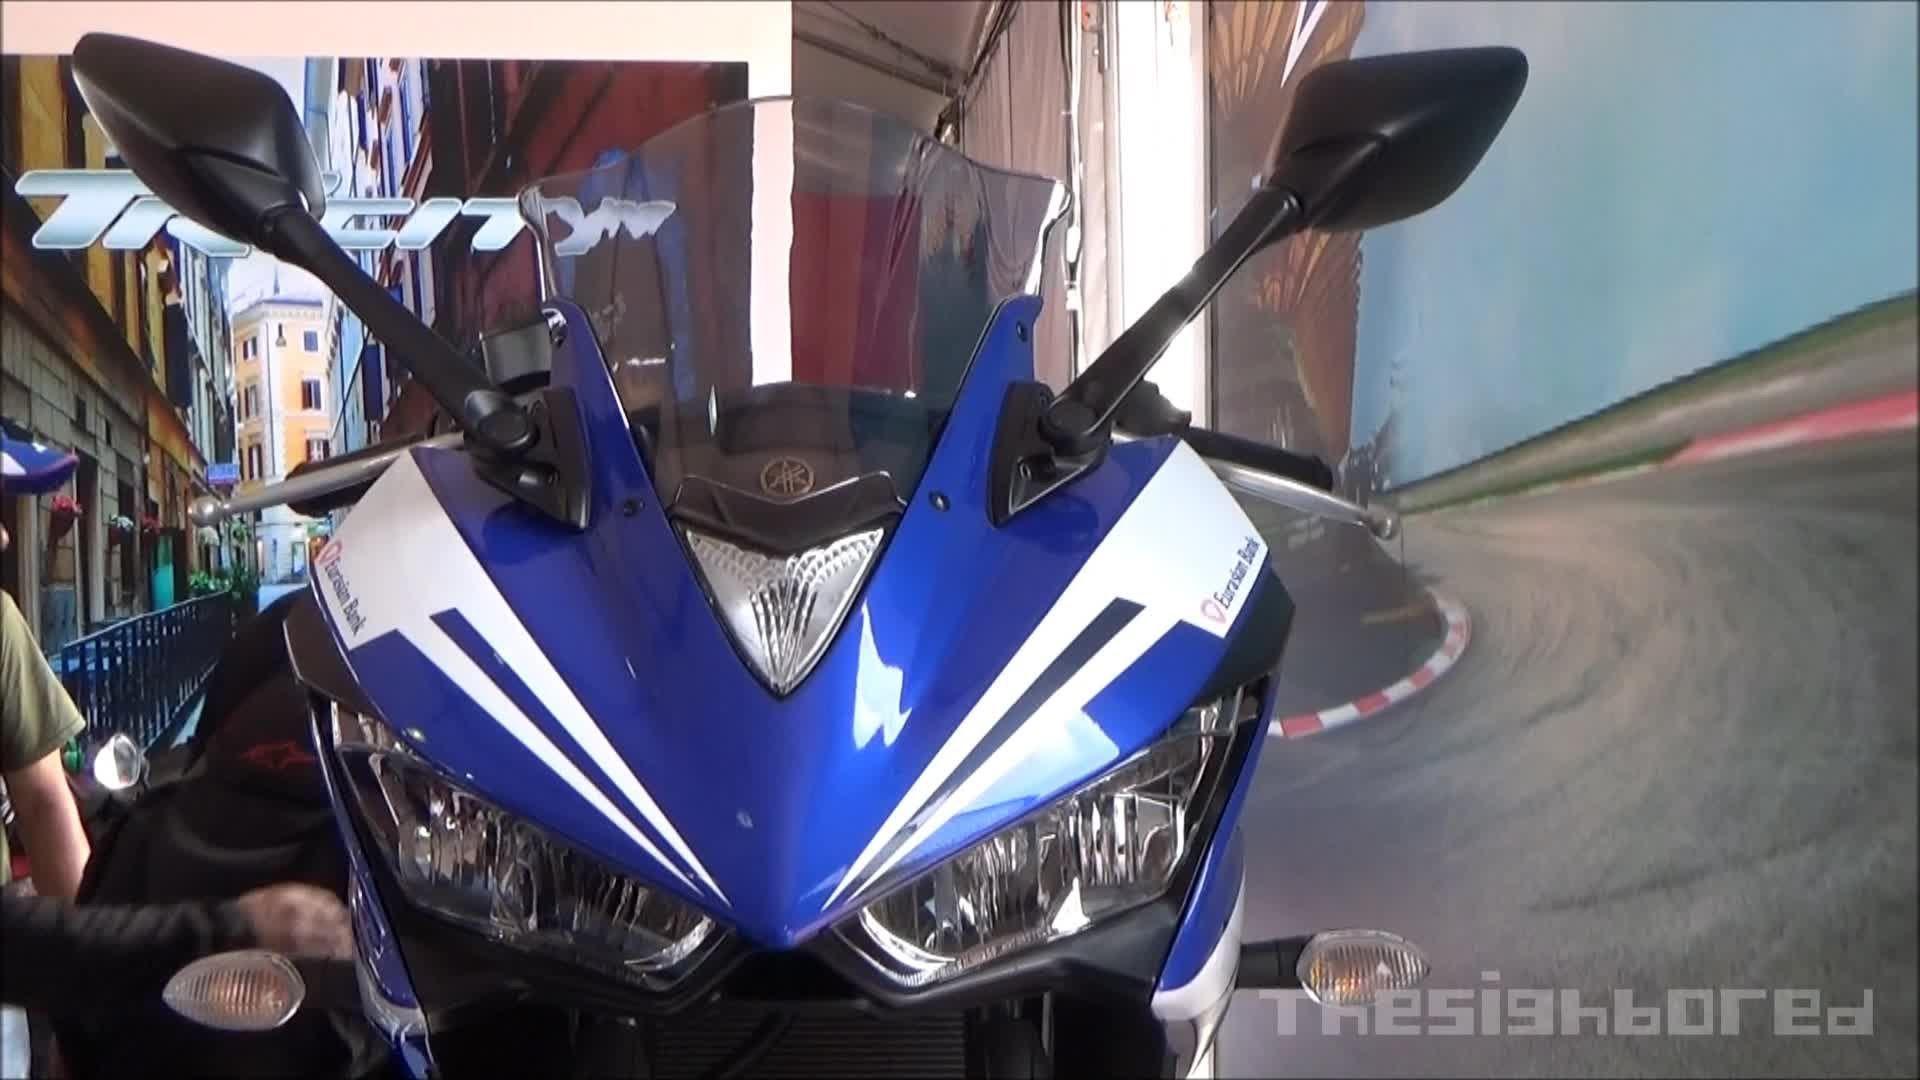 Yamaha YZF R25